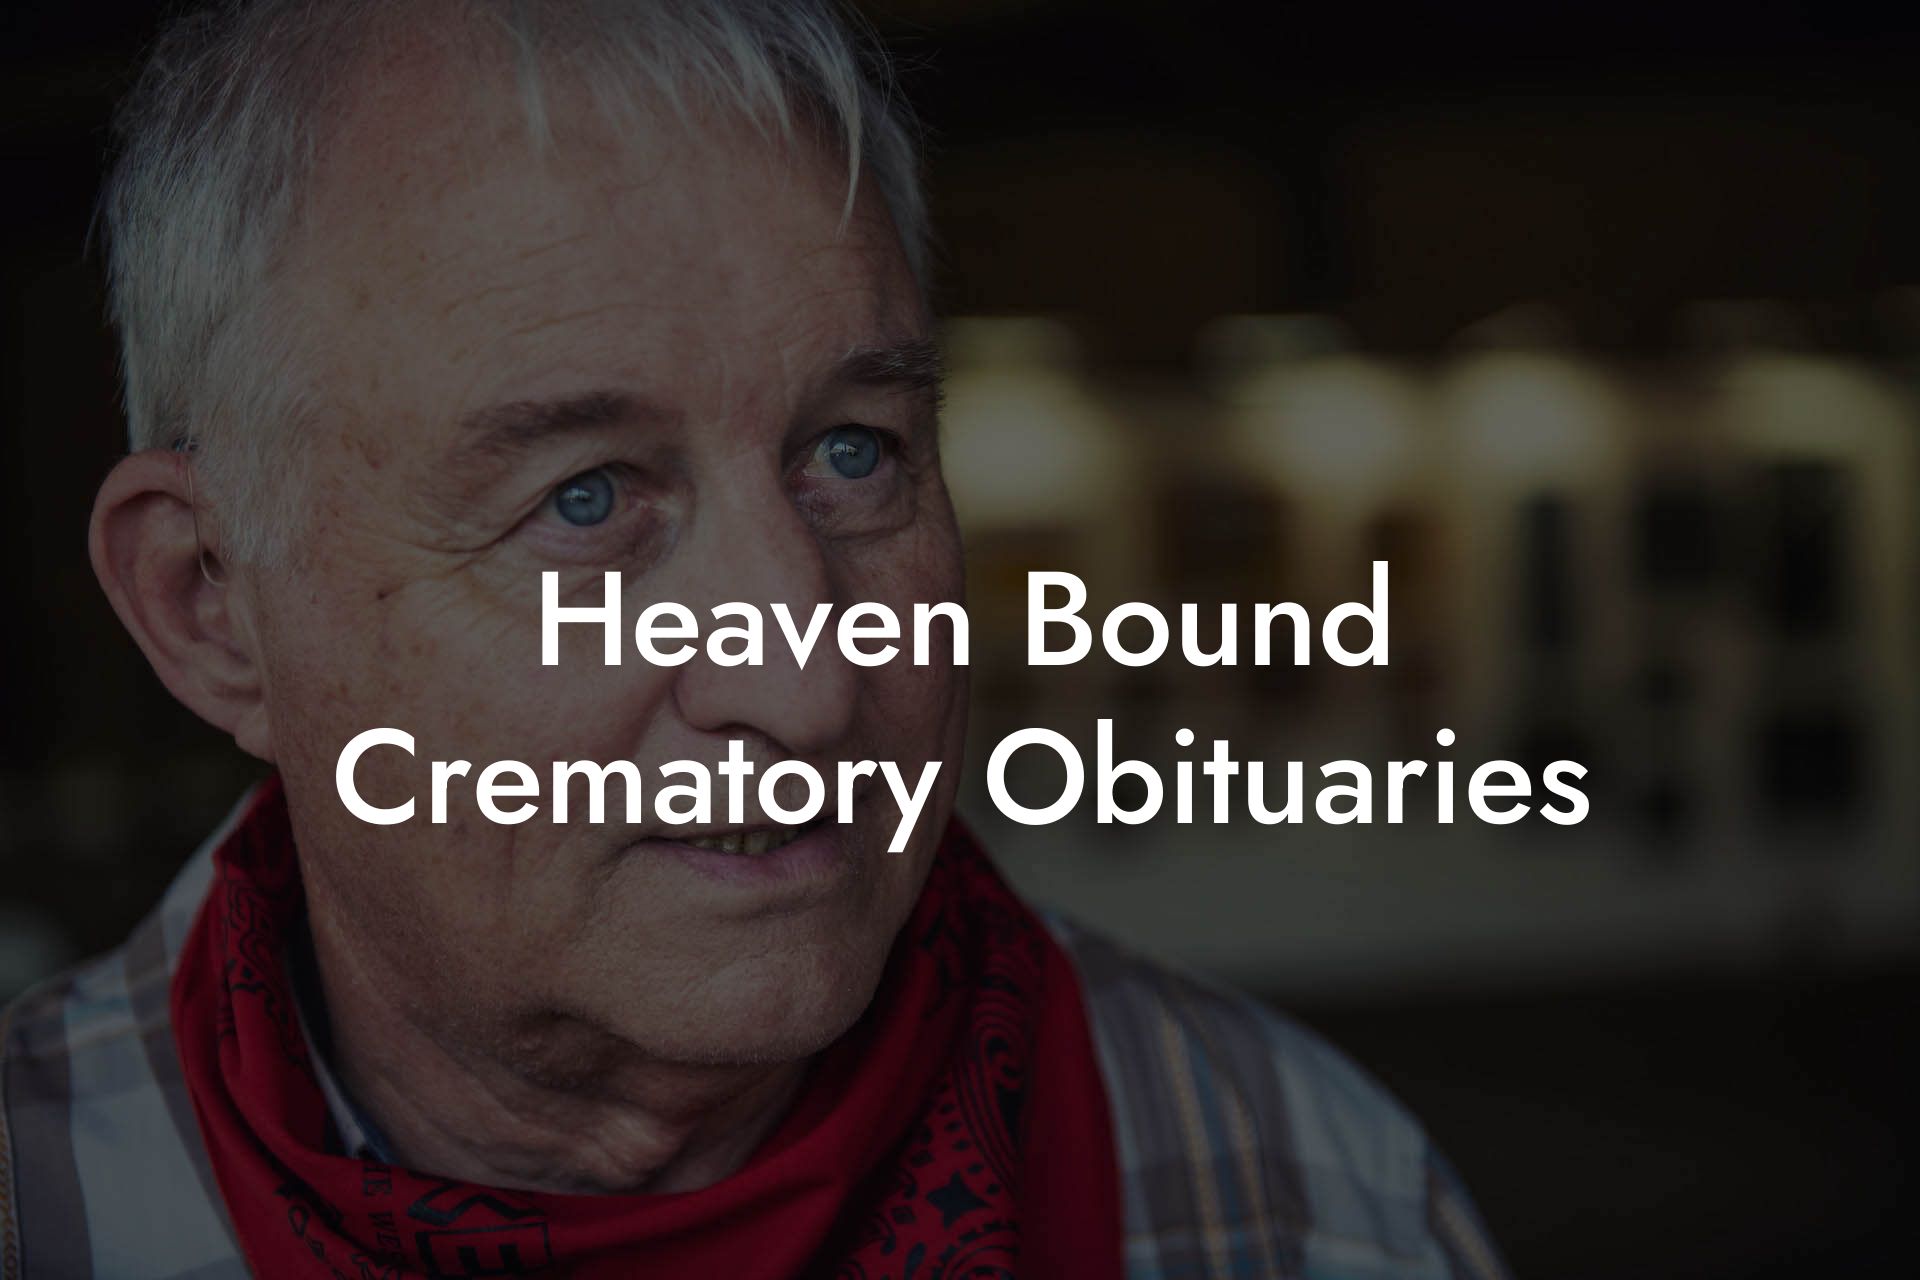 Heaven Bound Crematory Obituaries